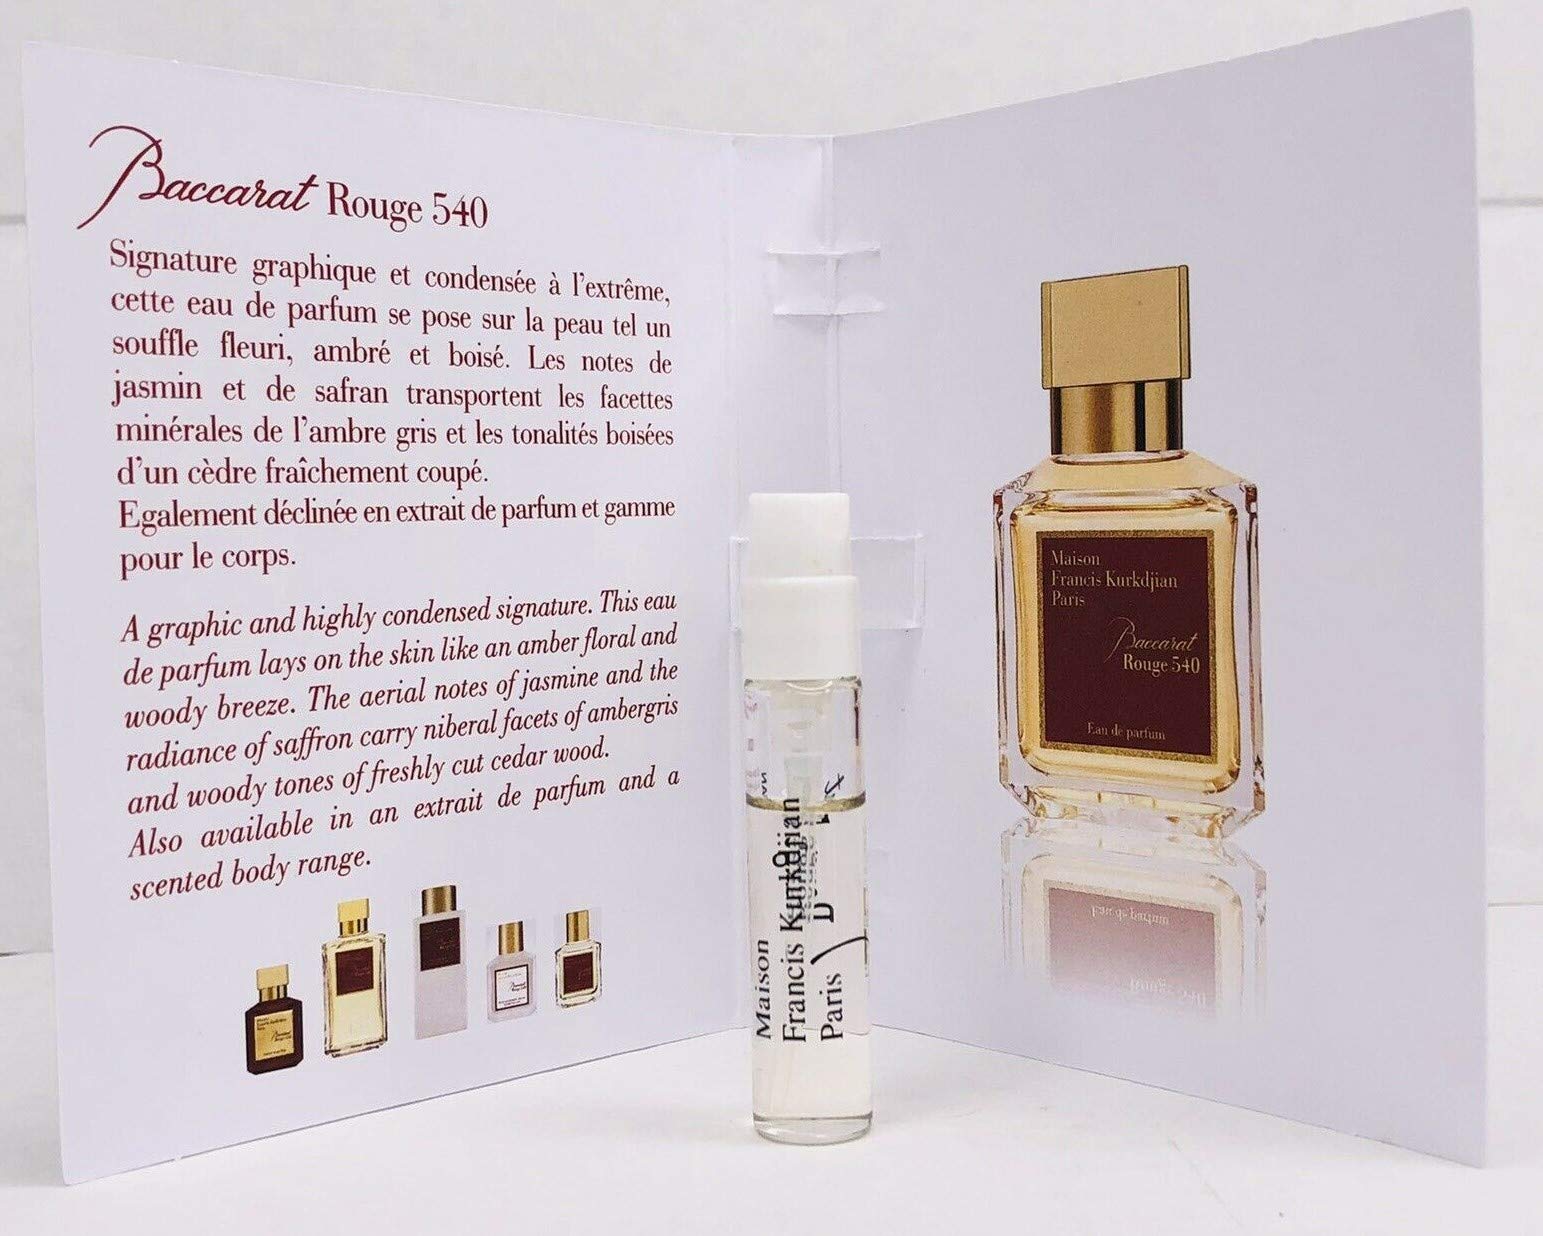 Maison Francis Kurkdjian BACCARAT ROUGE 540 Eau de Parfum Vial Spray 2ml / 0.06 fl oz